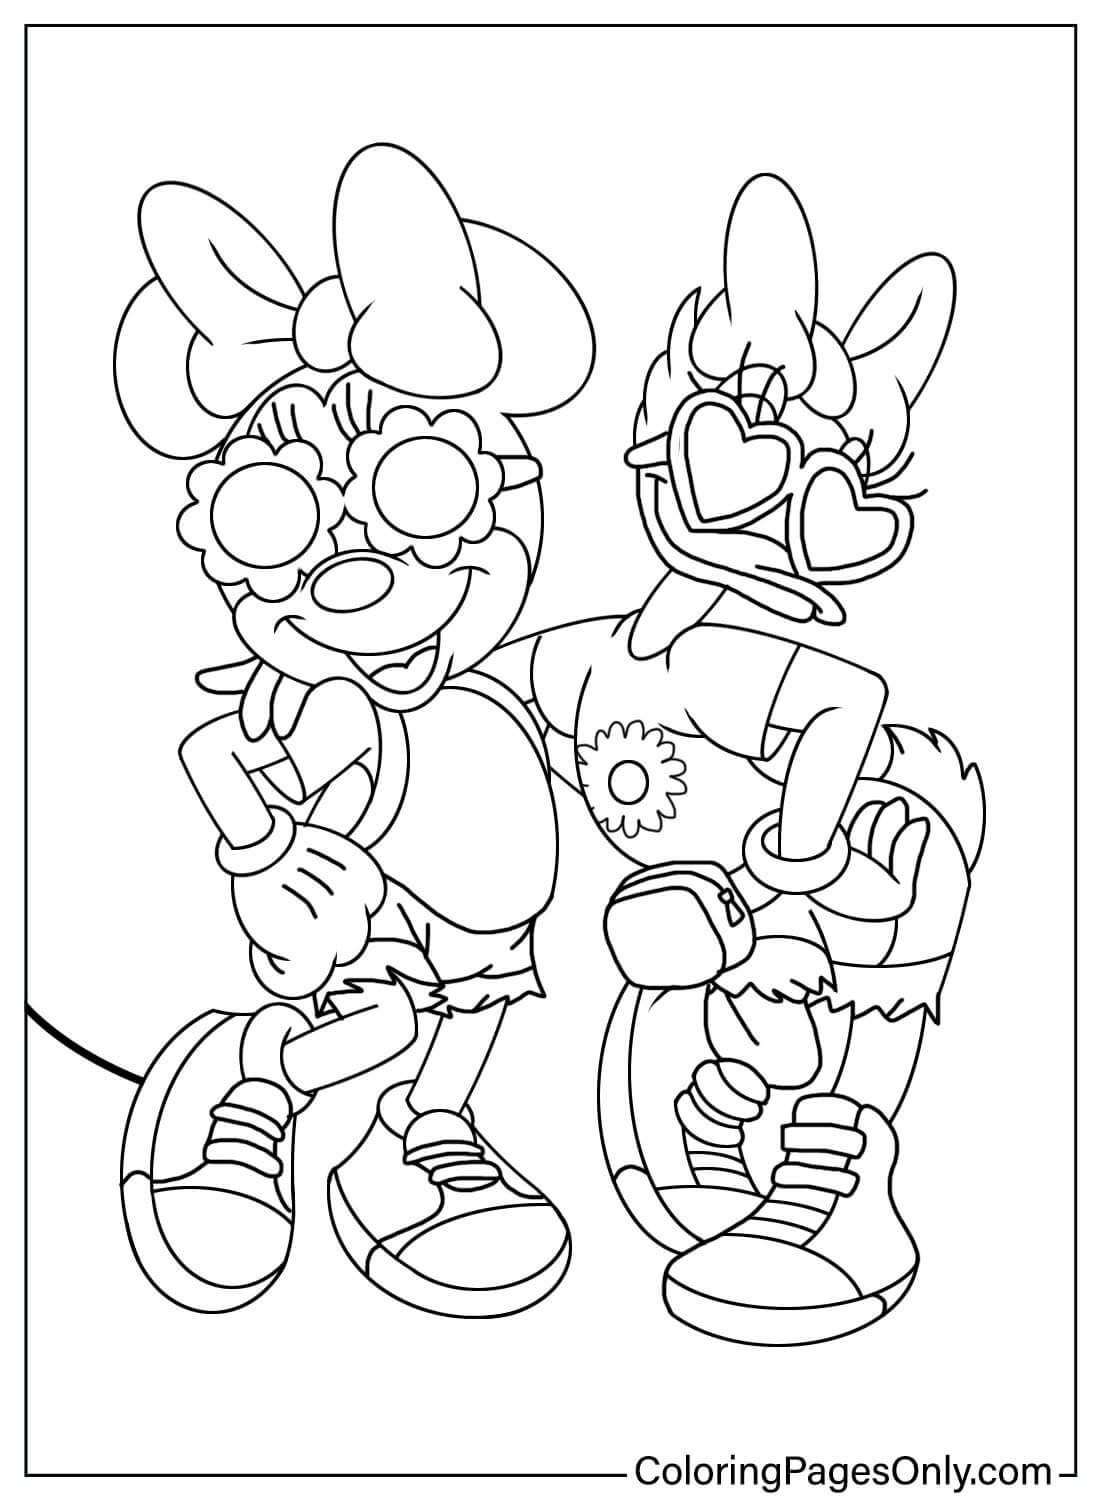 Página para colorir de Minnie Mouse e Margarida de Daisy Duck